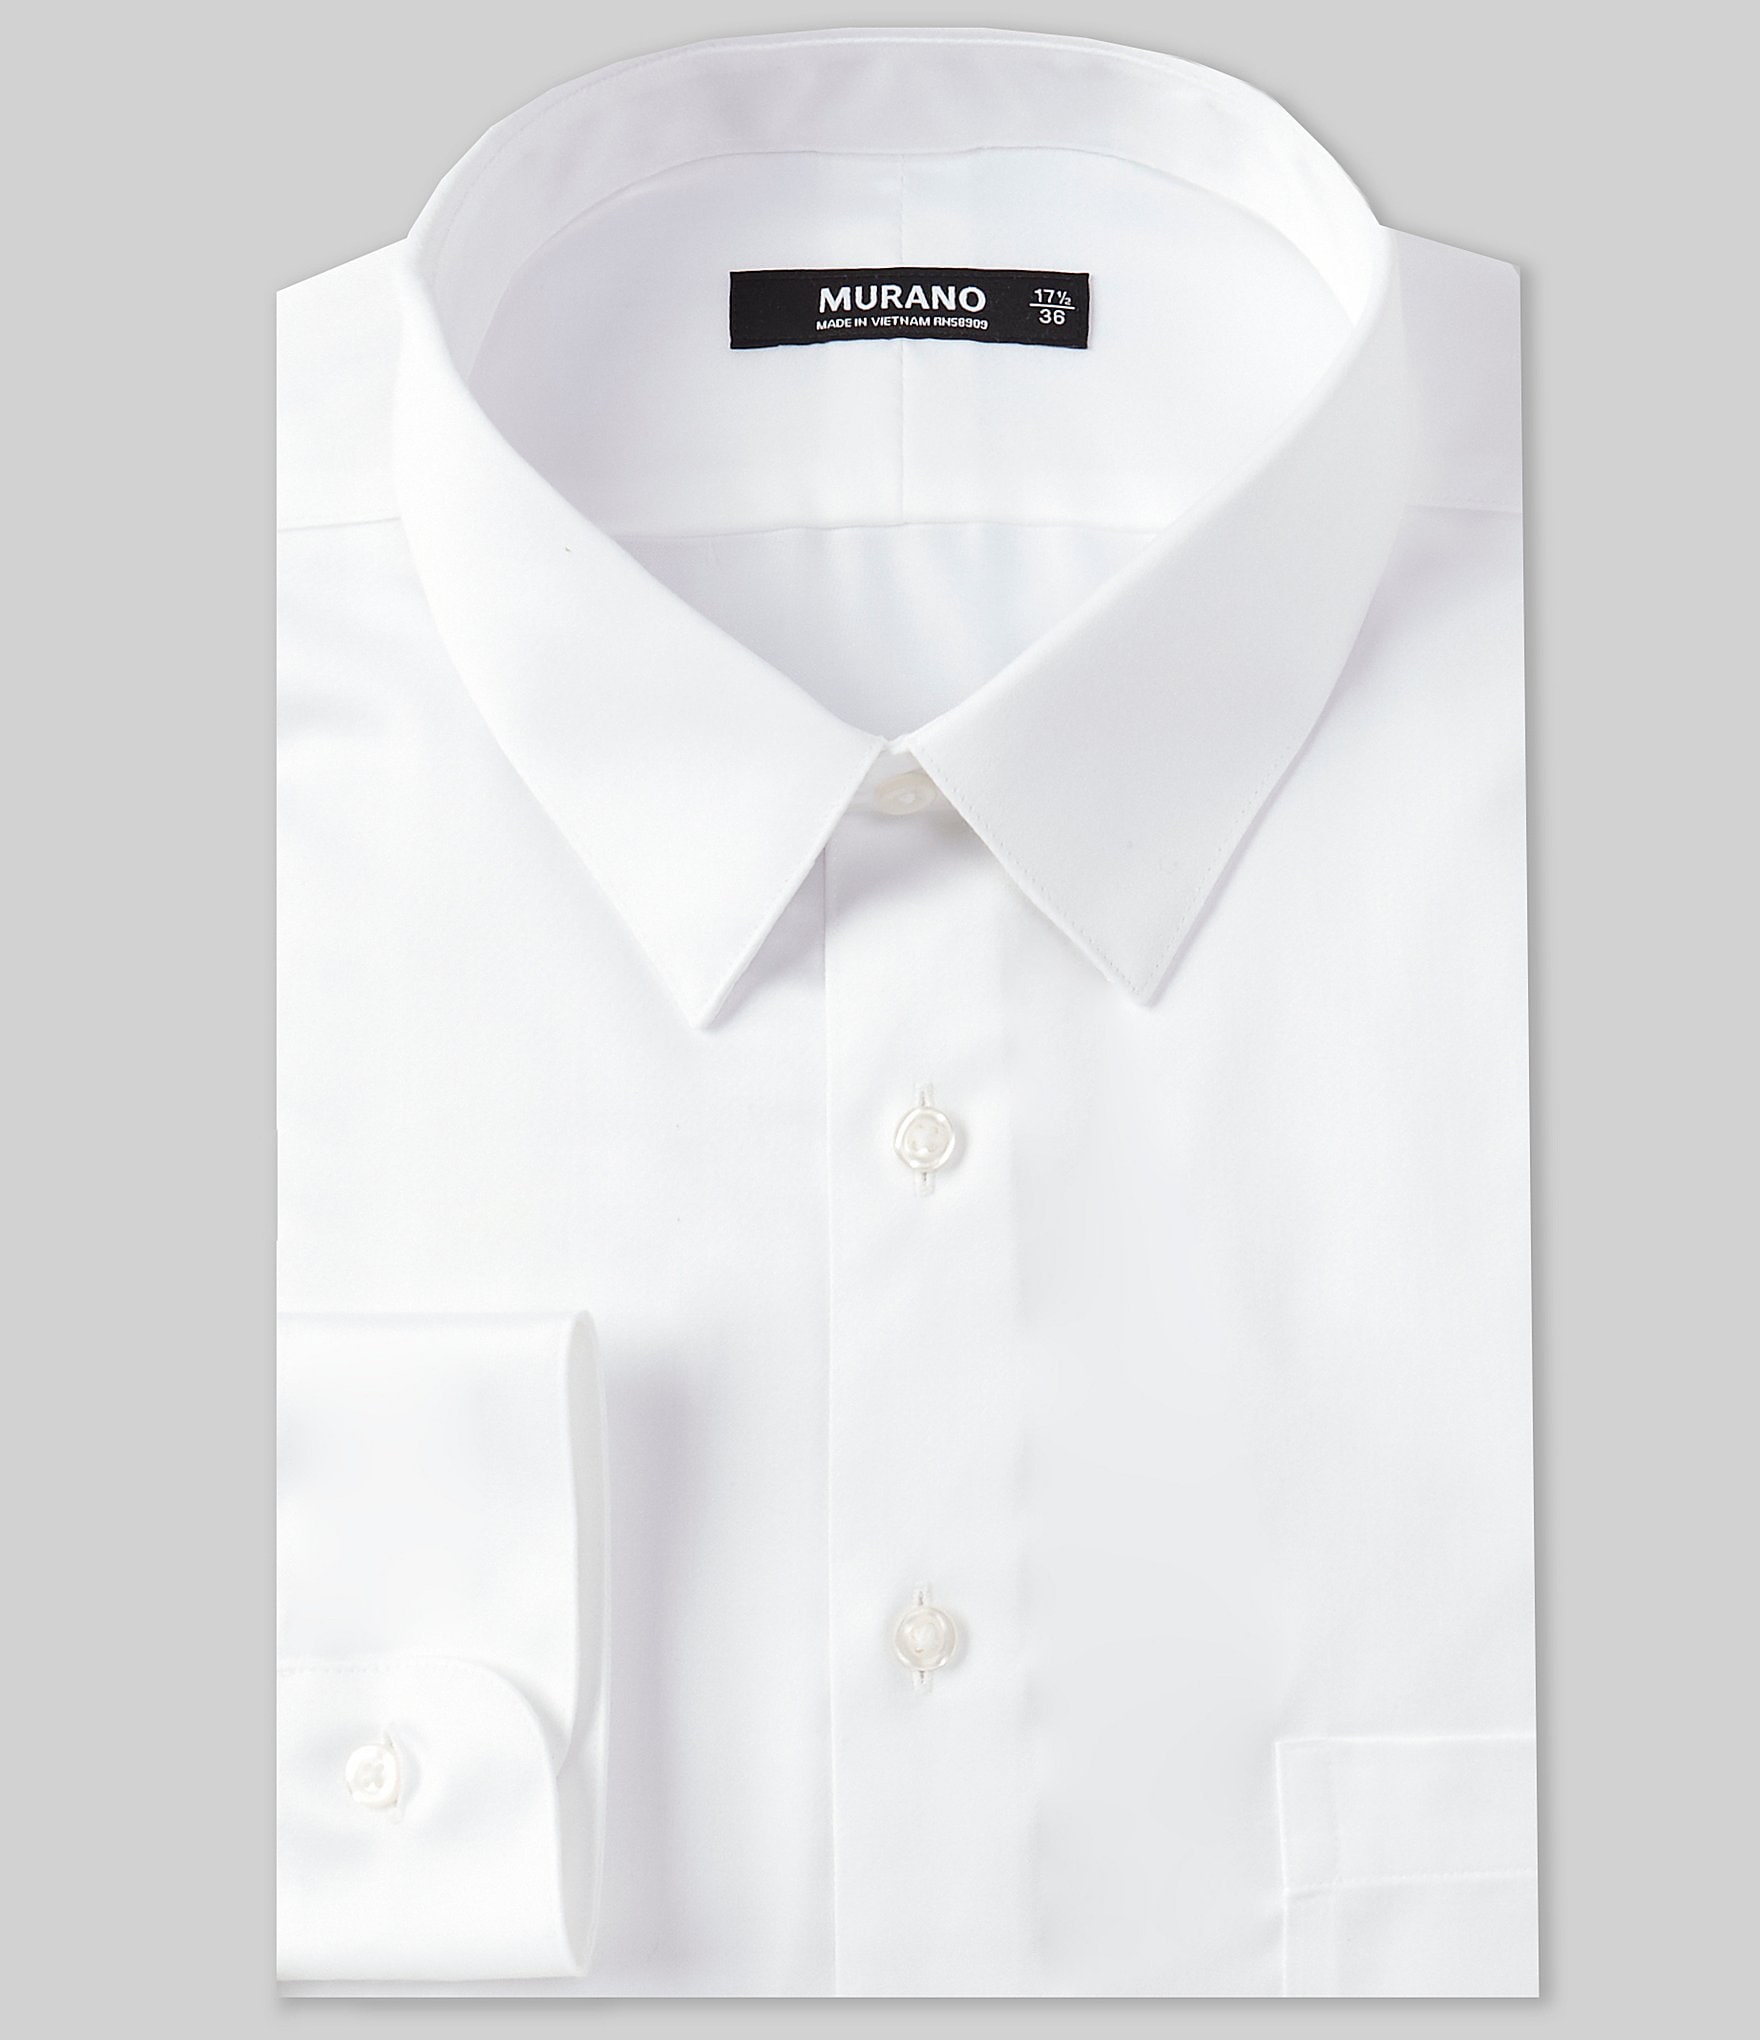 Murano Men's Shirts | Dillard's